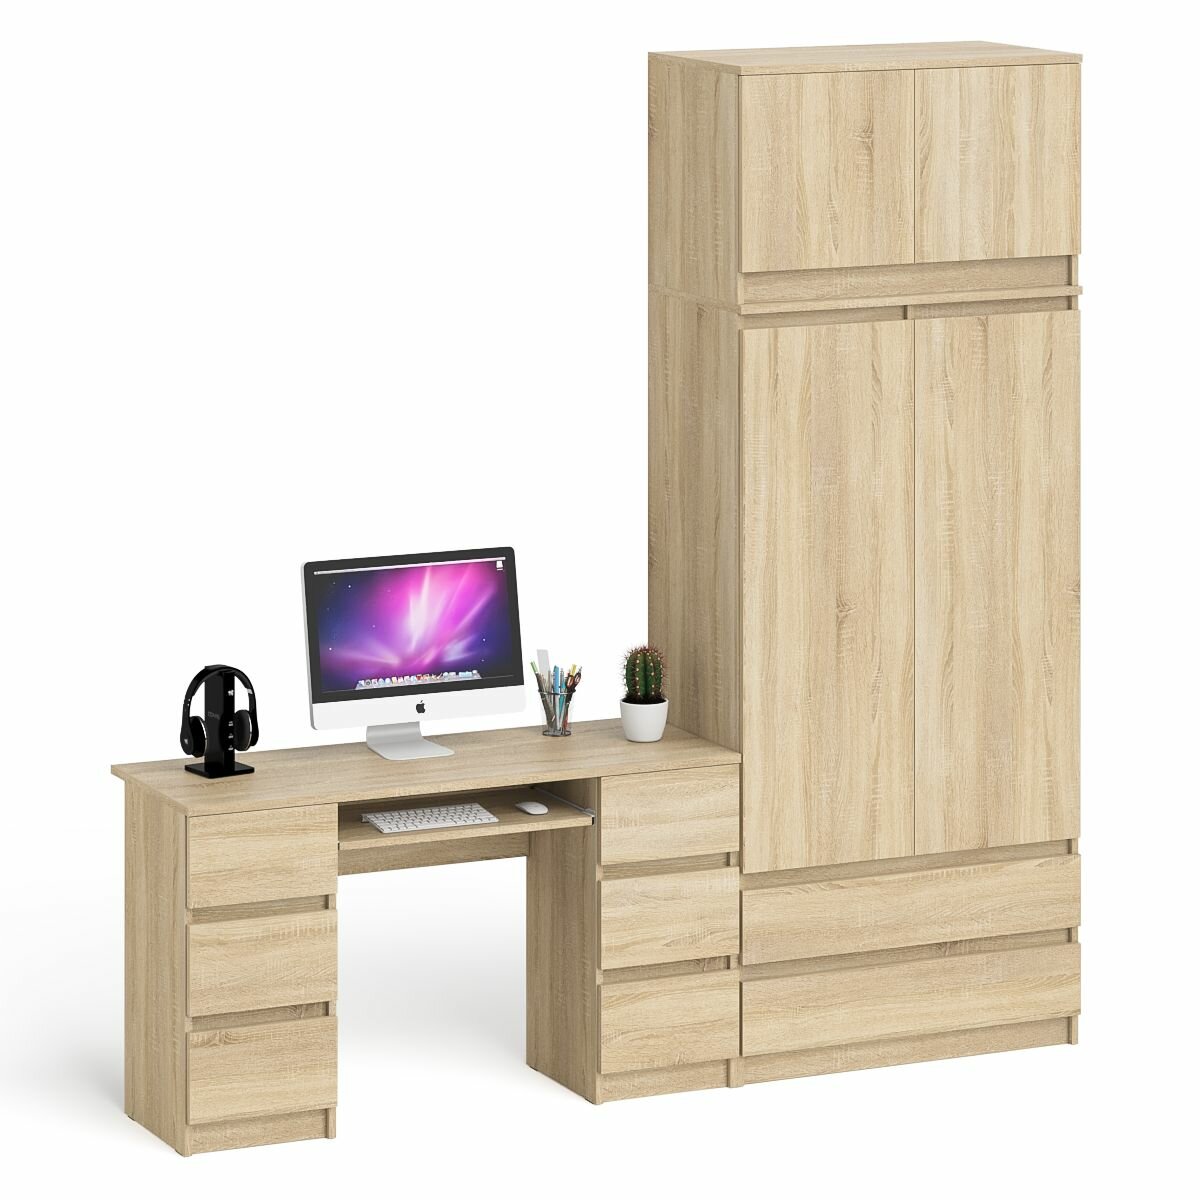 Стол 2-х тумбовый компьютерный СВК Мори со шкафом и антресолью цвет дуб сонома, 225,8х50,4х234,2 см.